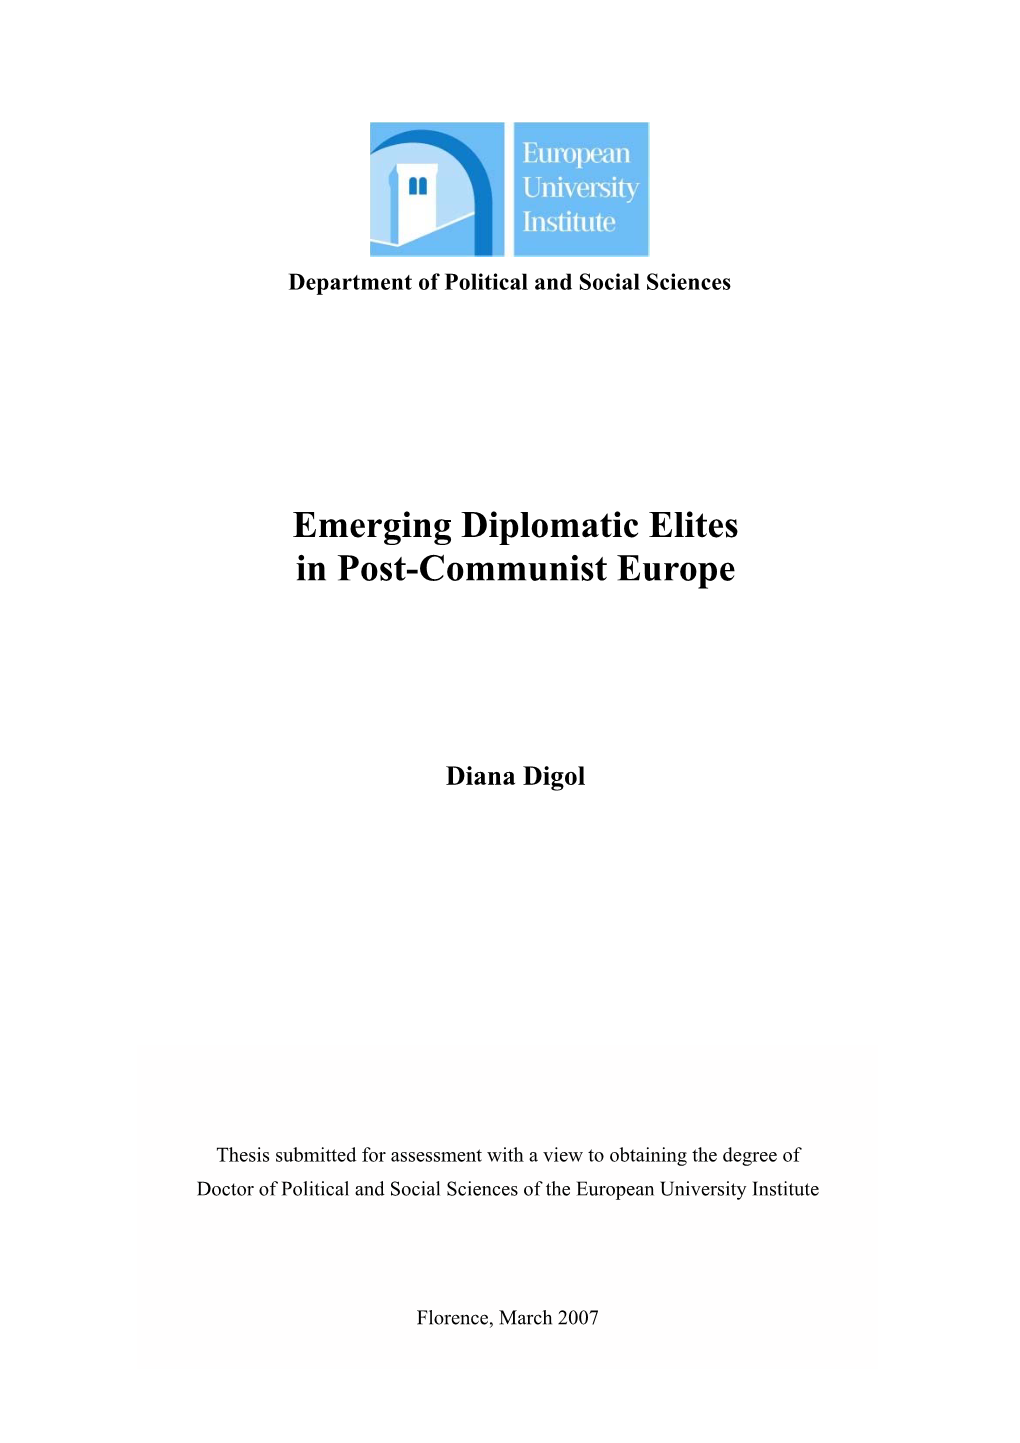 Emerging Diplomatic Elites in Post-Communist Europe